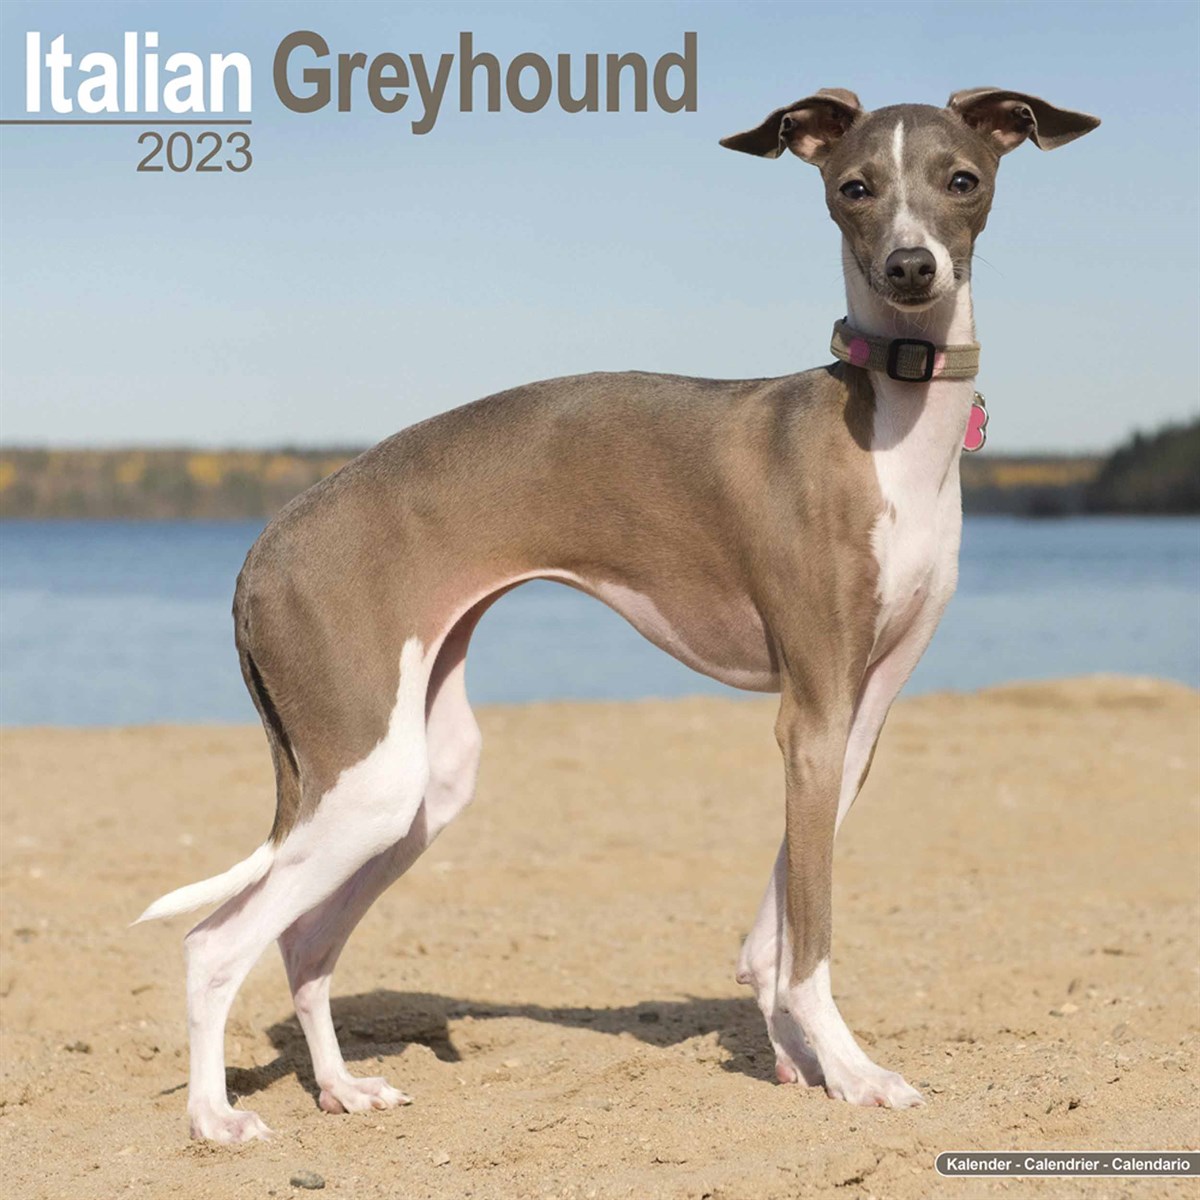 Italian Greyhound 2023 Calendars